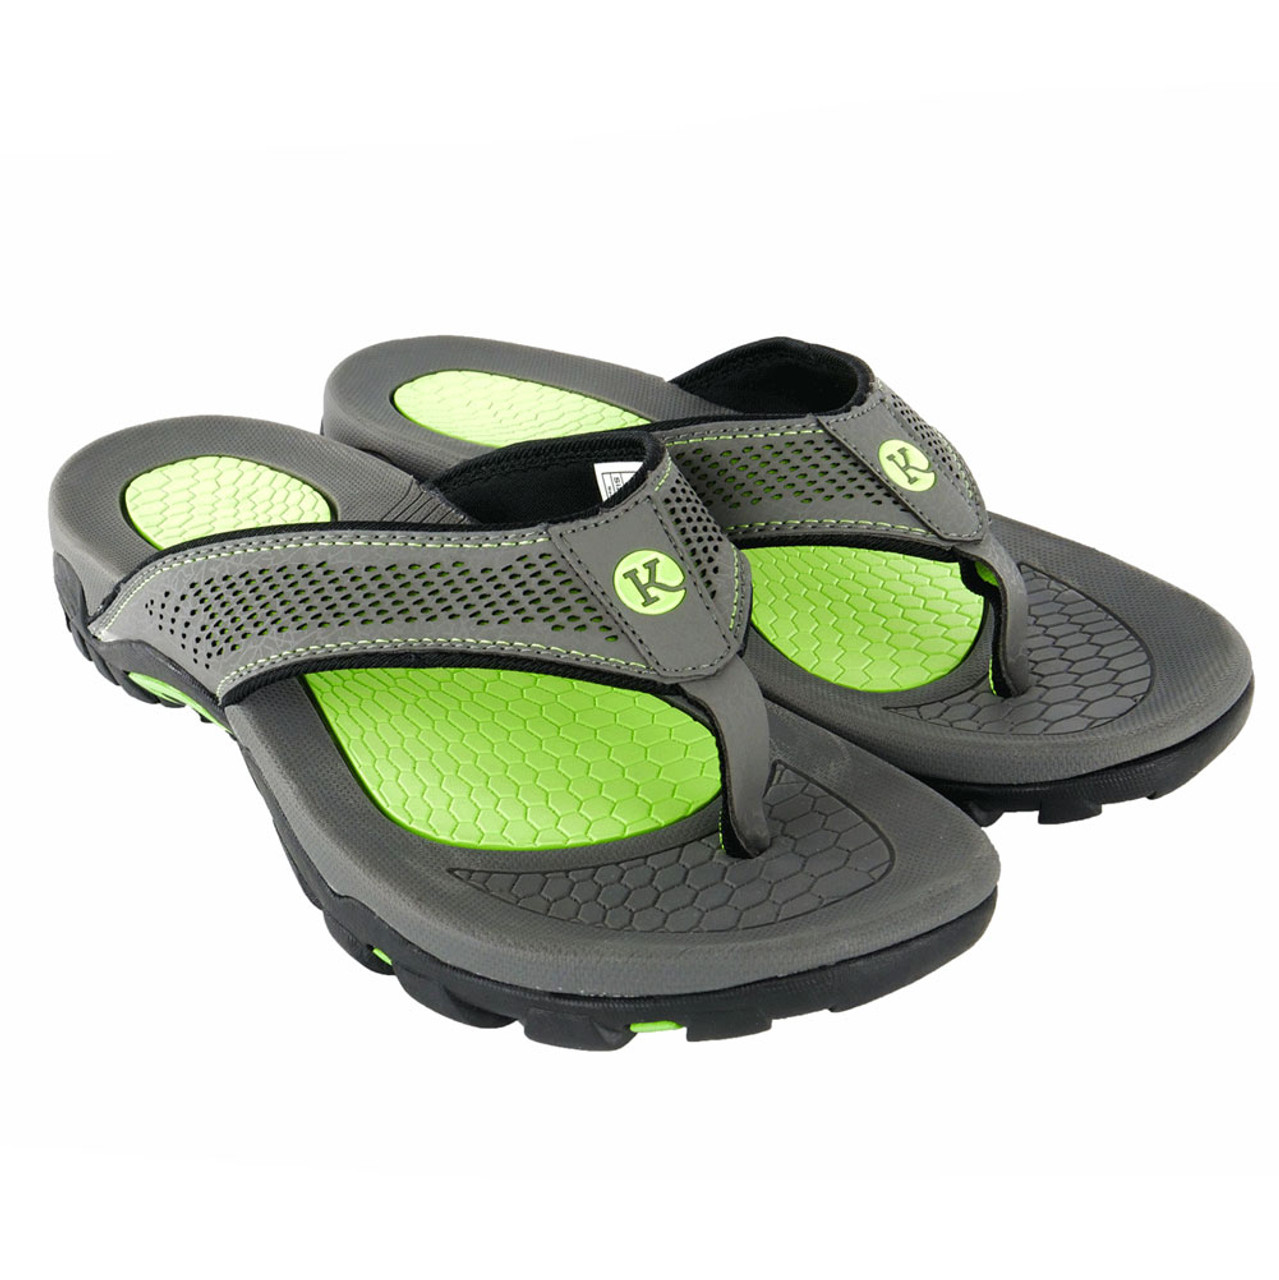 Kaiback Comfort Sandals